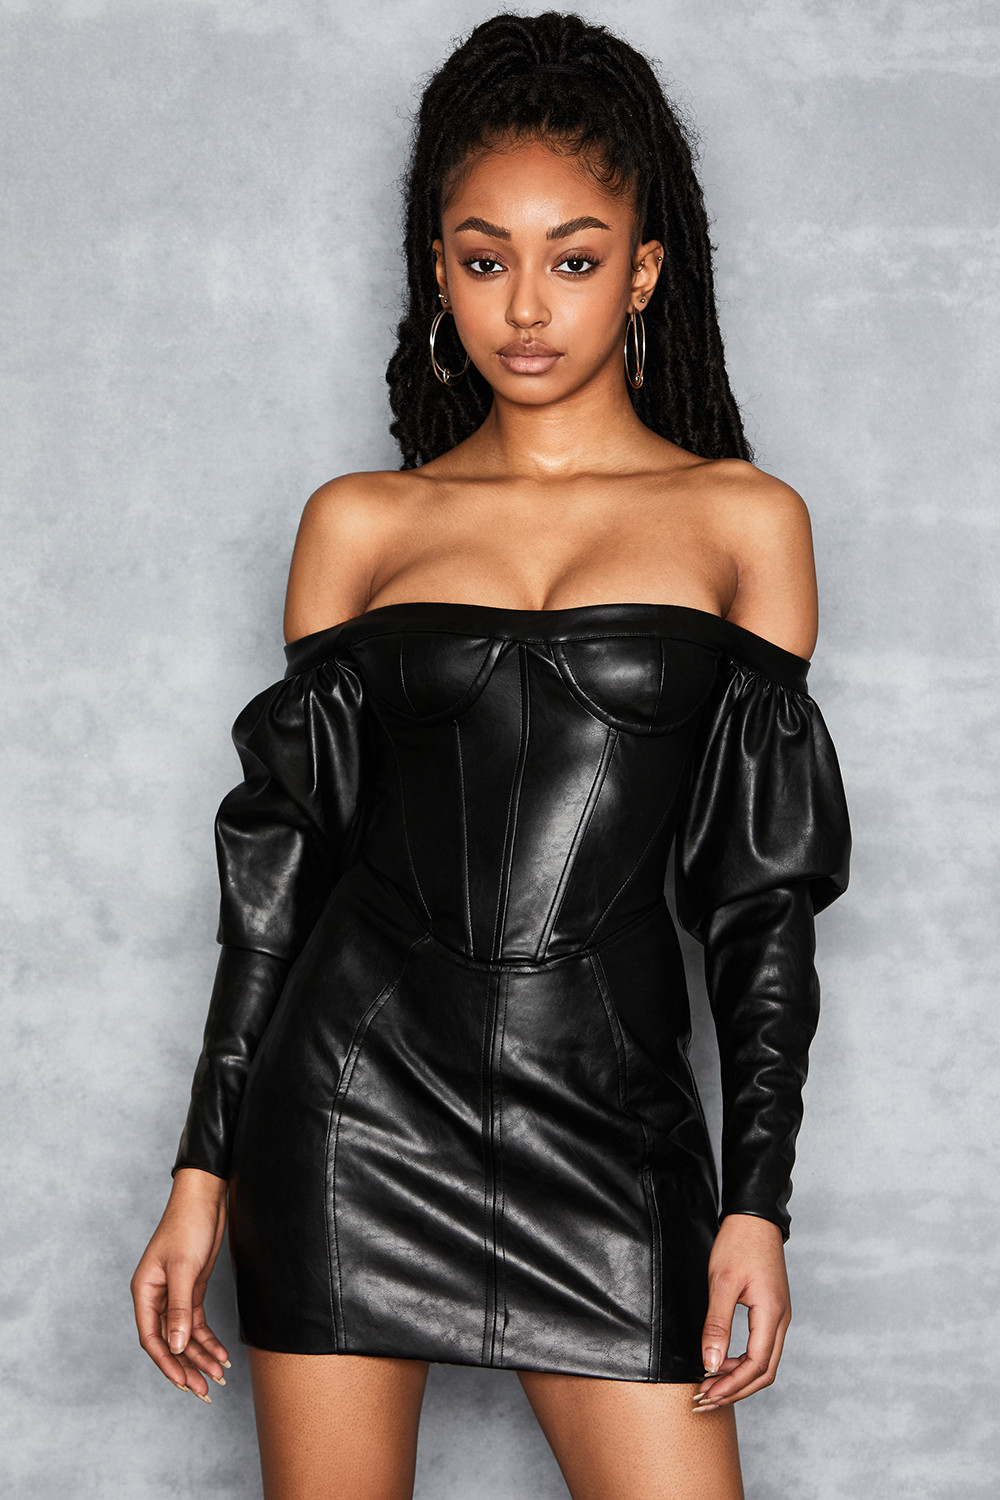 Personal' Black Off Shoulder Vegan Leather Corset Dress - Mistress Rock